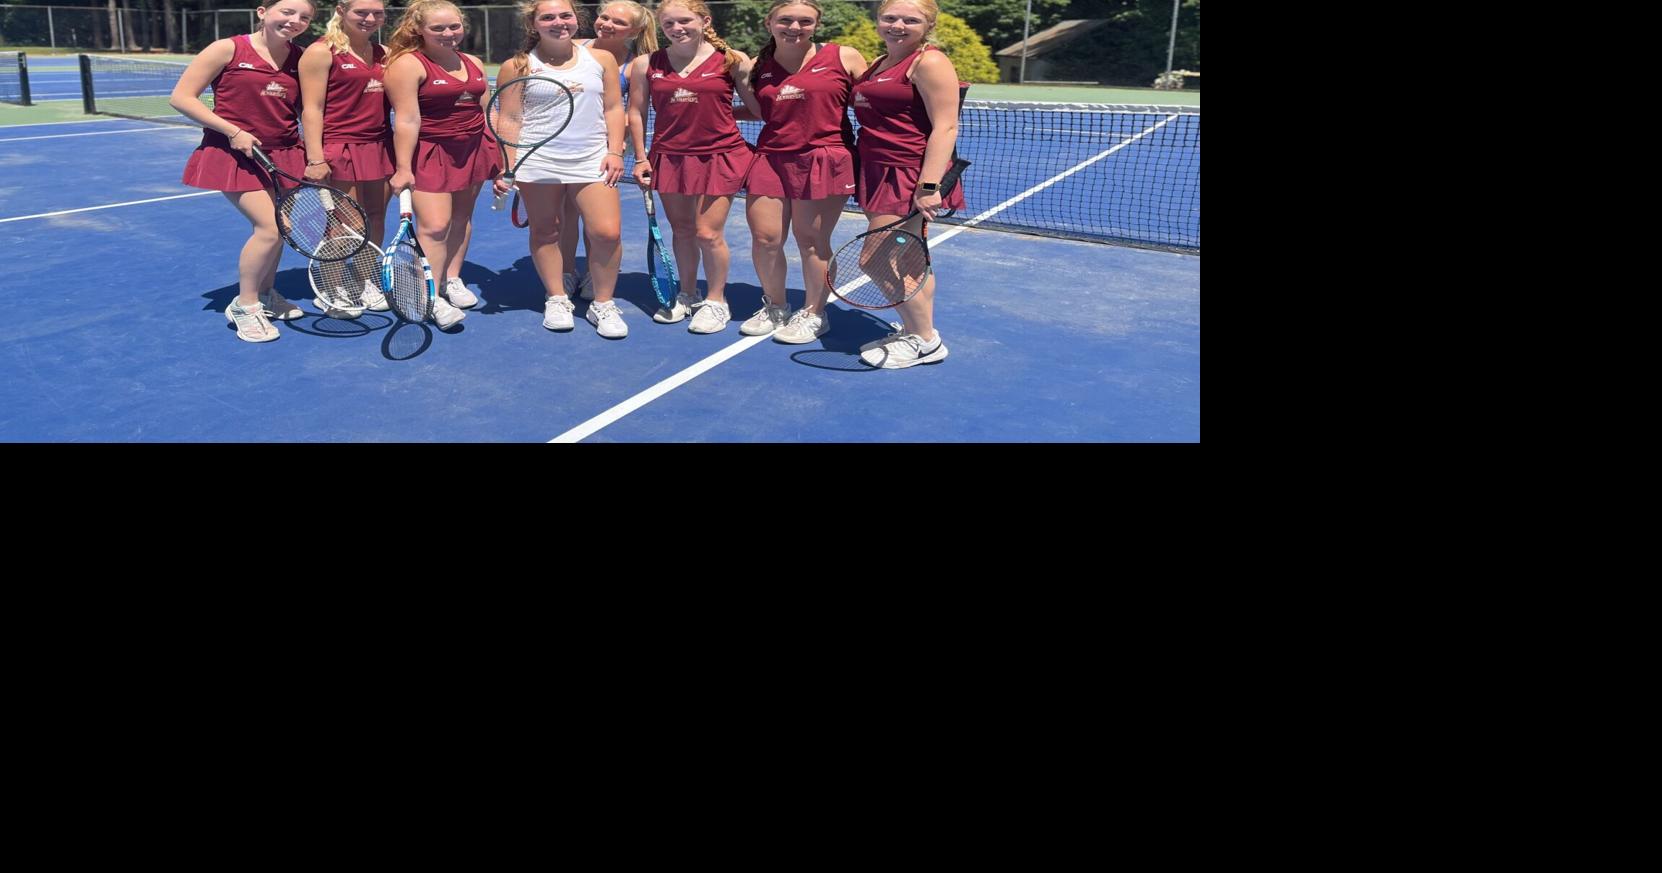 Update: Newburyport order rejected by court, officially ending girls tennis season |  Sport